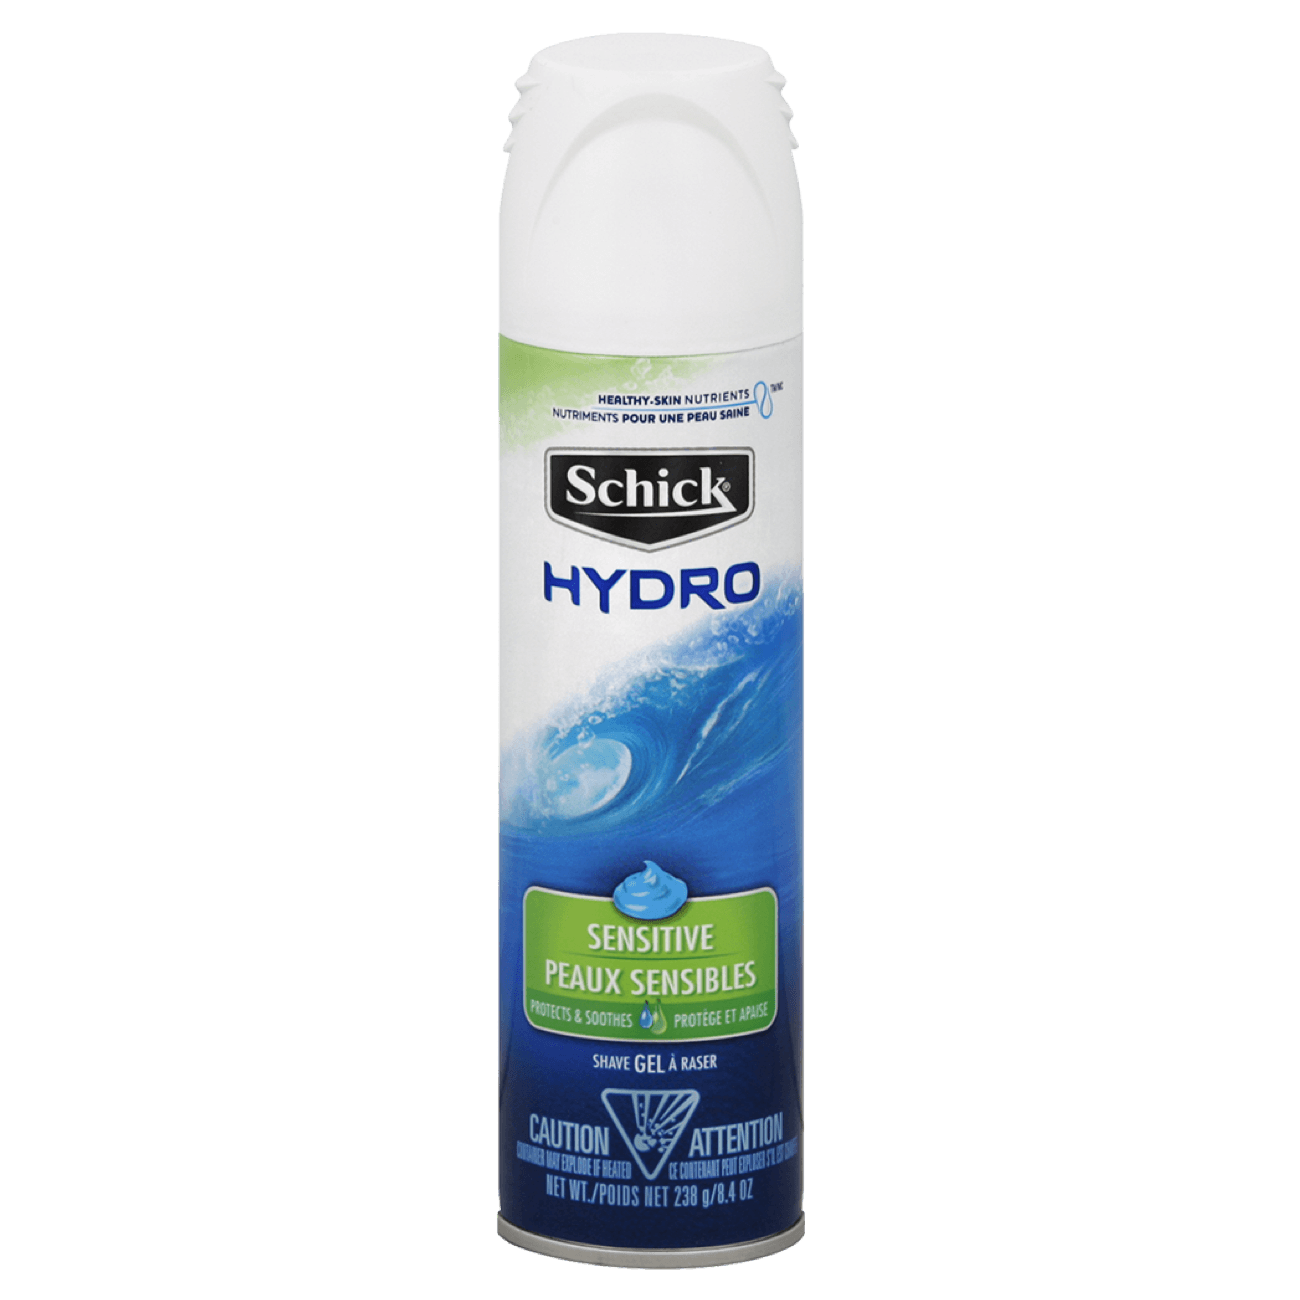 Hydro Sensitive Shave Gel